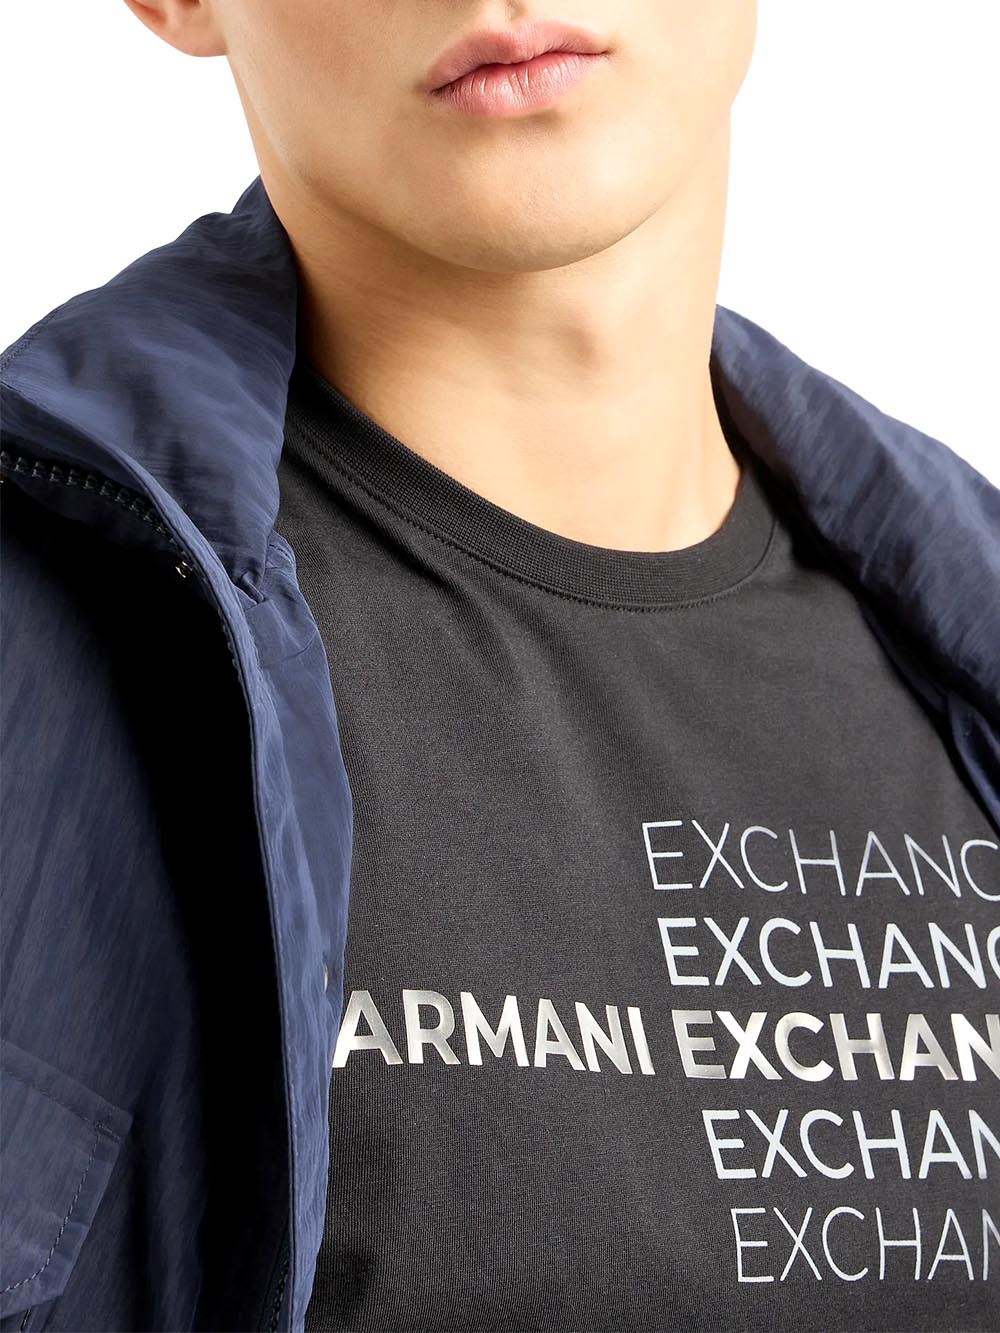 Armani Exchange T-shirt Uomo 3dztac Zj9tz Nero